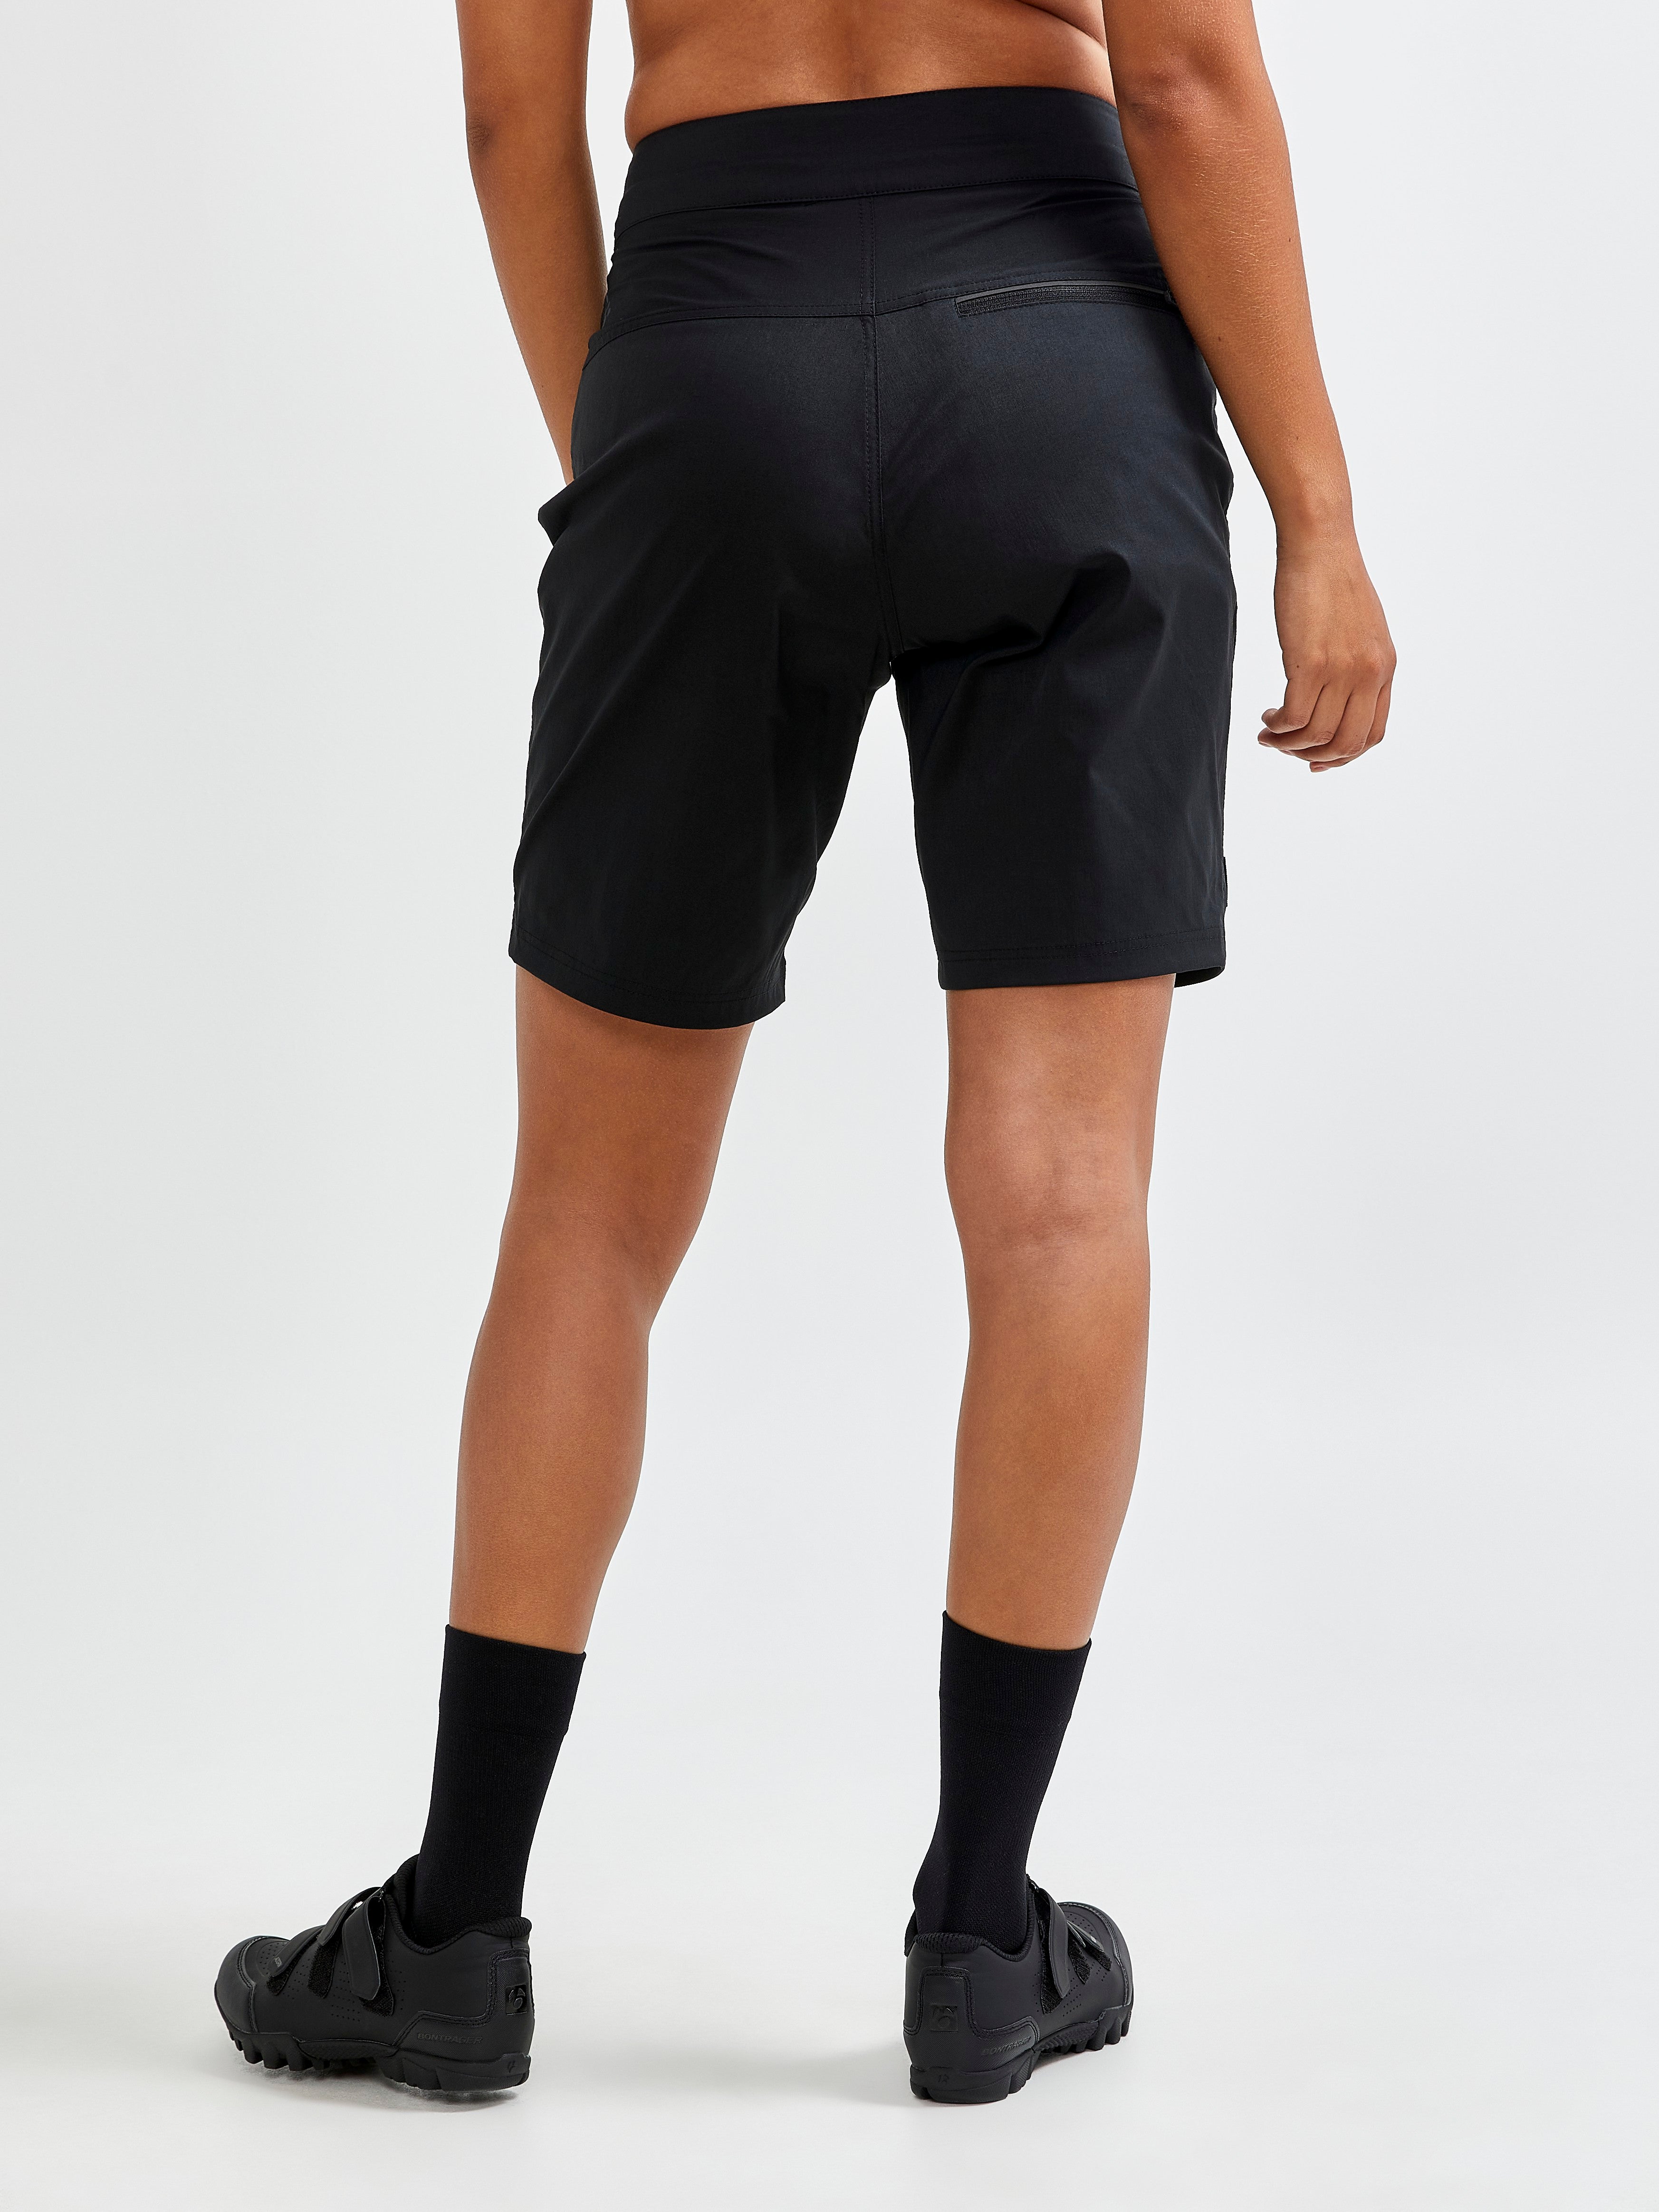 DNAKEN Women's High Waisted Flowy Athletic Shorts Ruffle Skirt